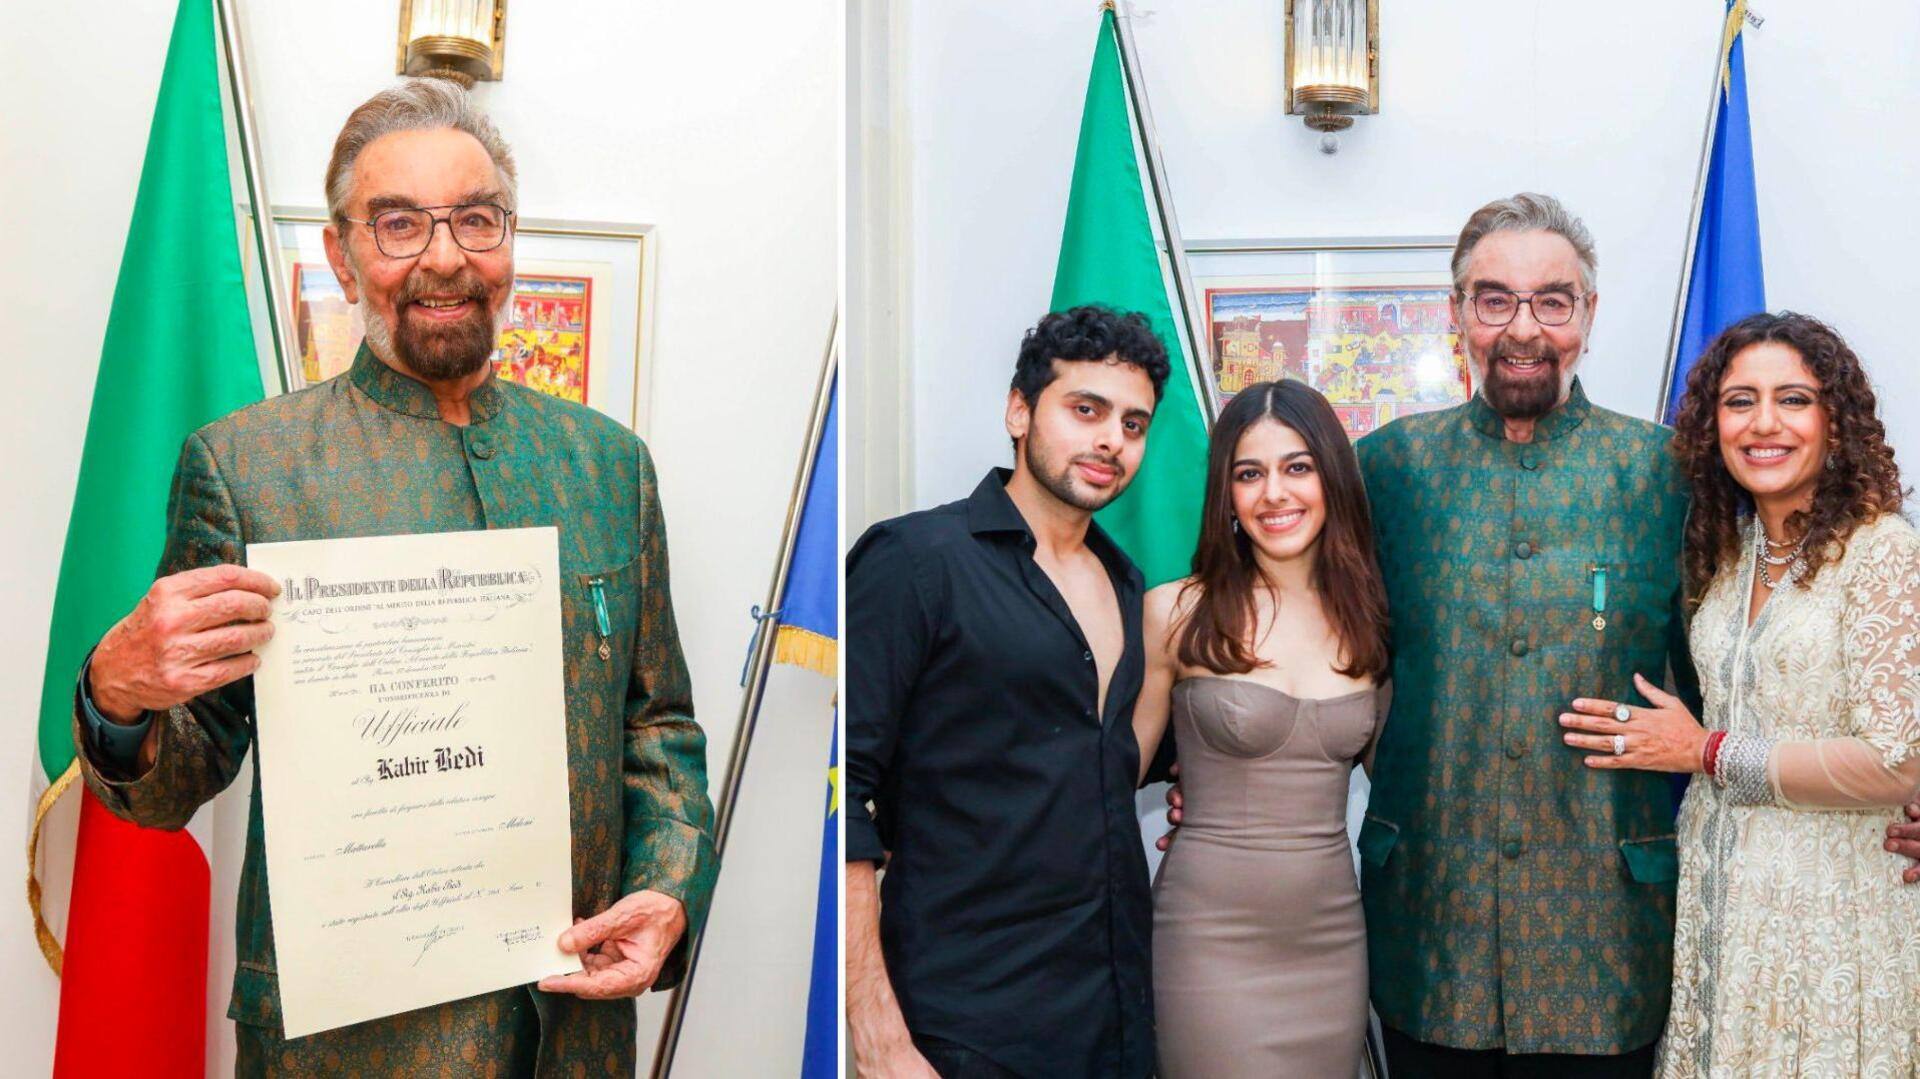 Kabir Bedi receives Italy's highest civilian honor